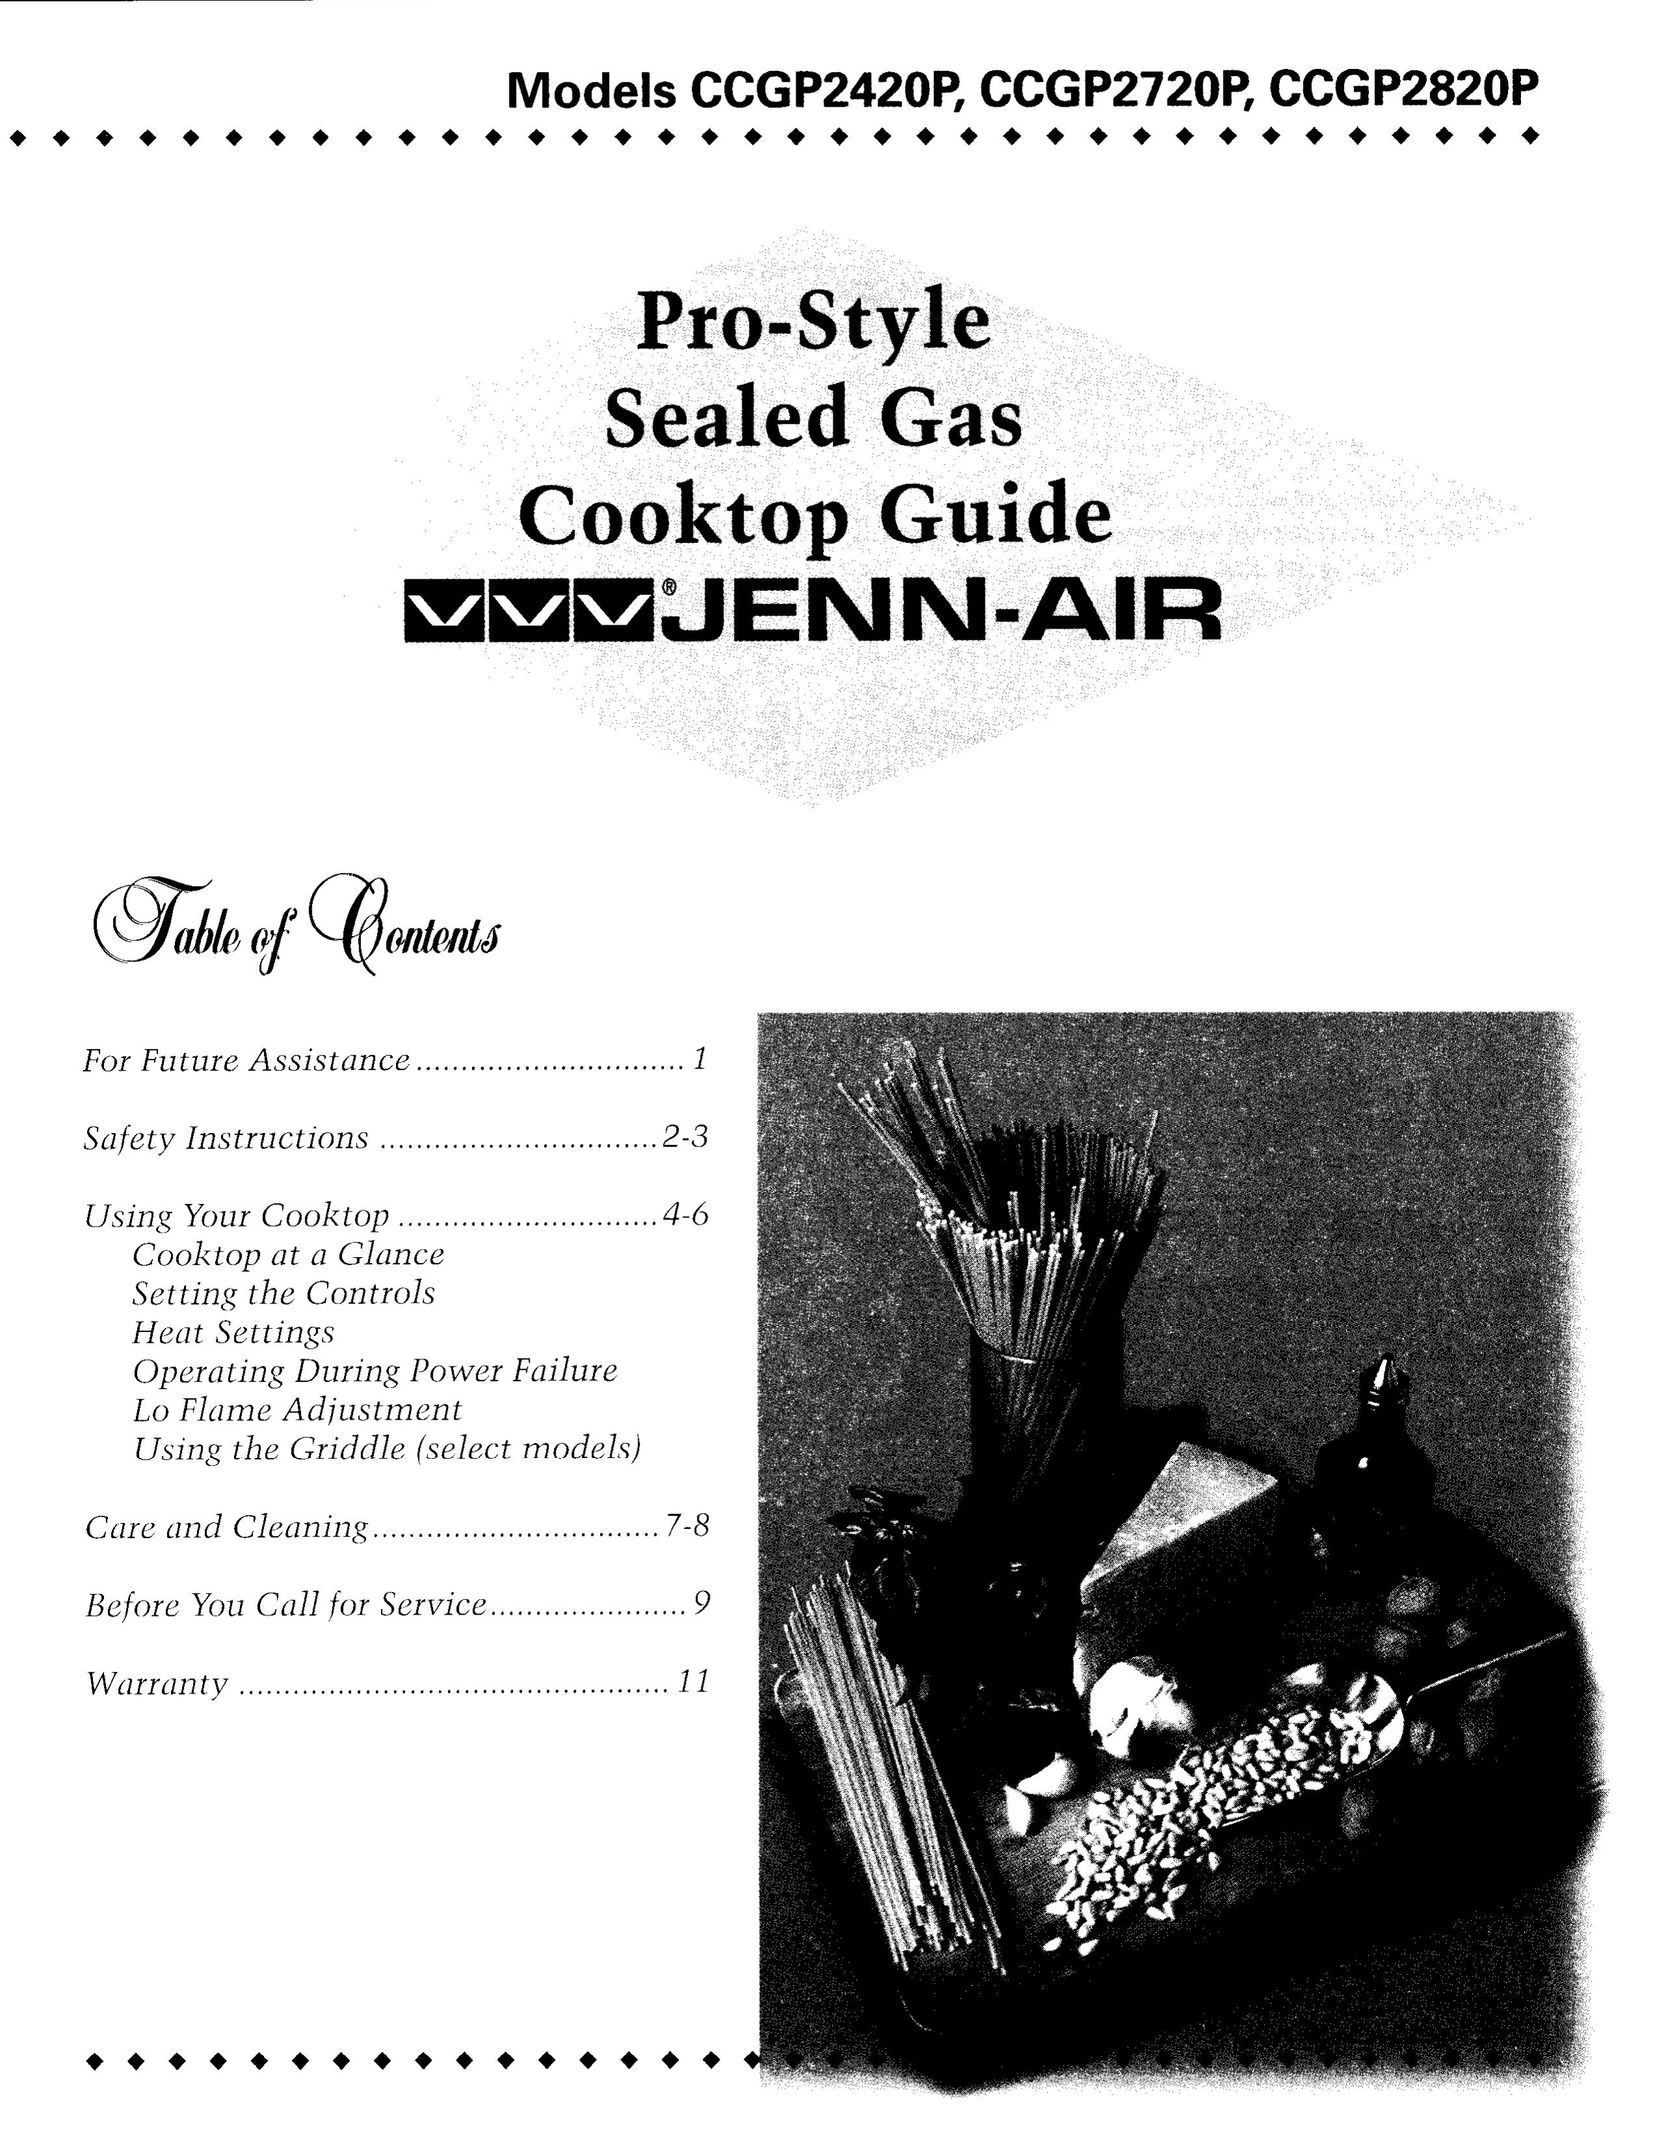 Jenn-Air CCGP2820P Cooktop User Manual